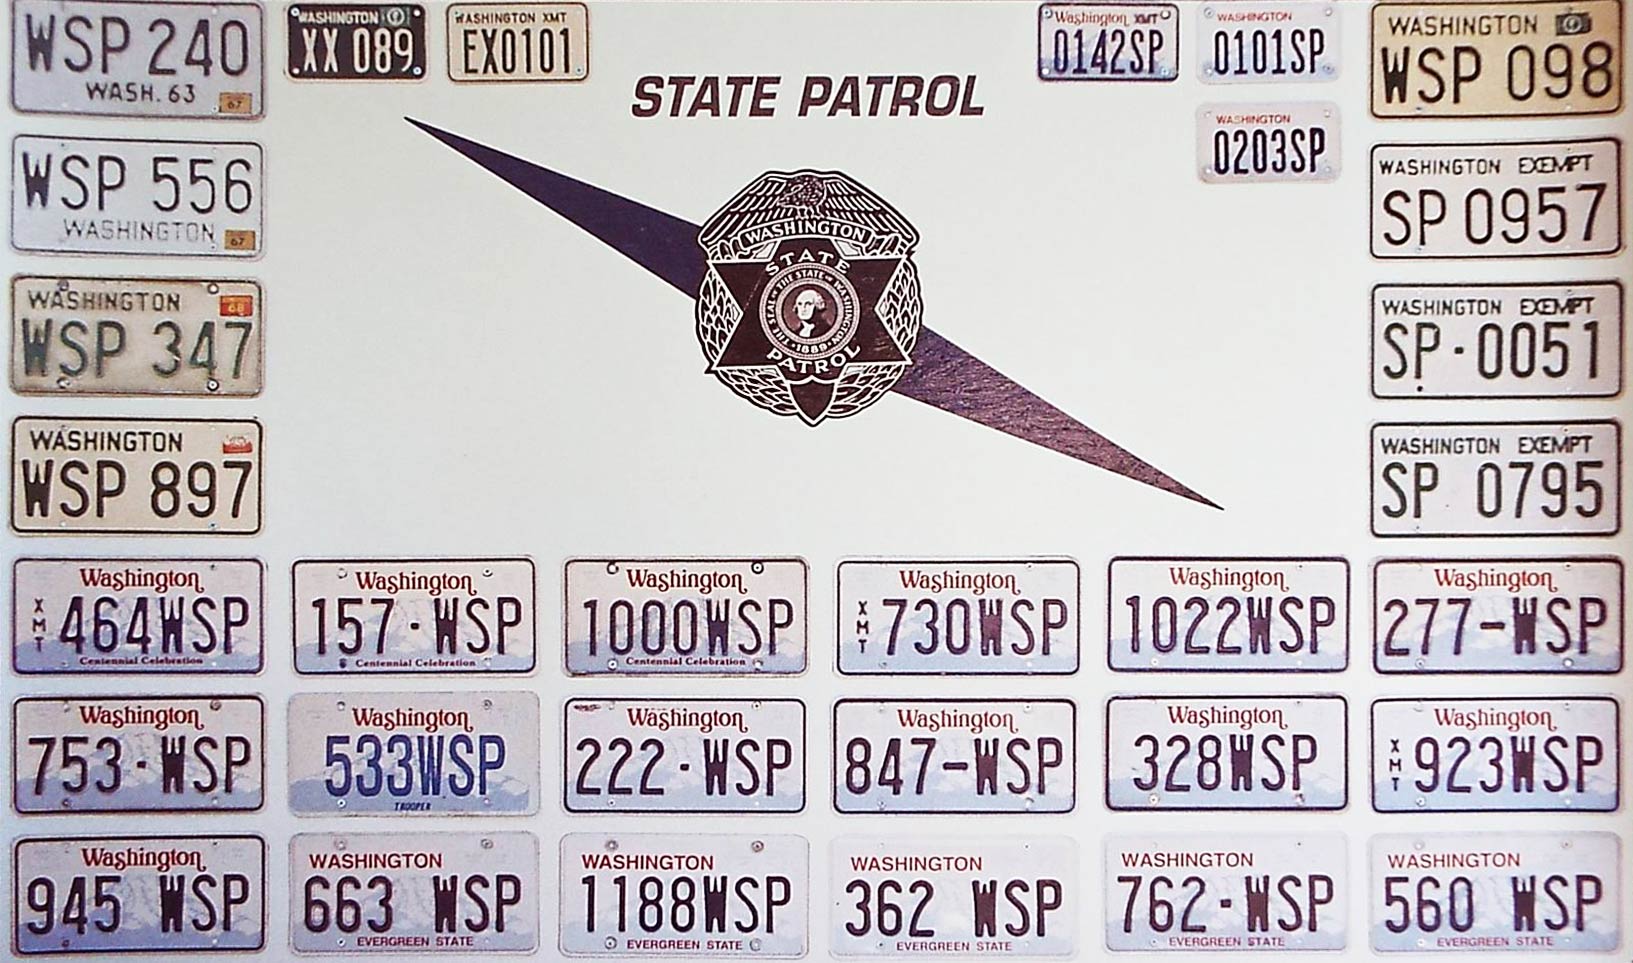 Washington  police license plate image